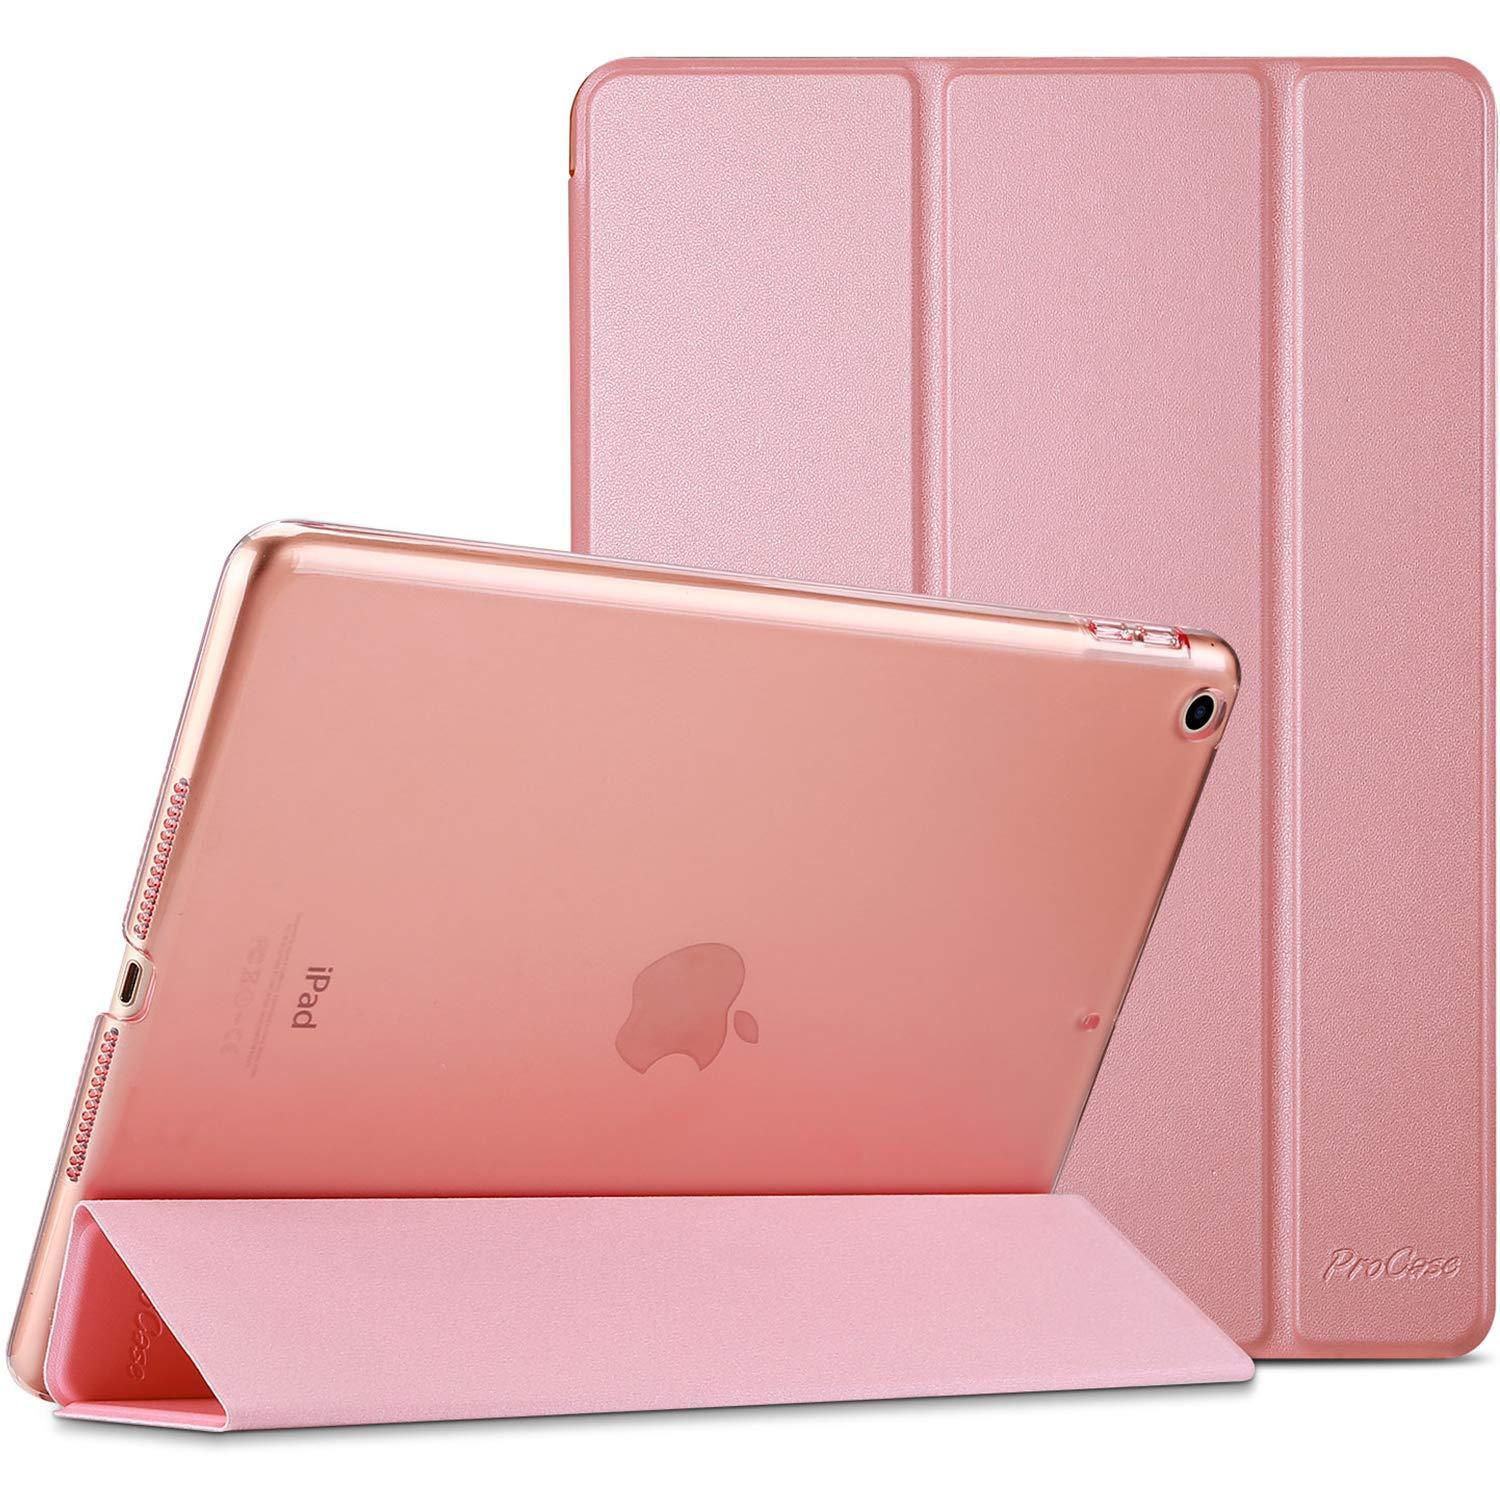 iPad 9.7 2018 6th/2017 5th Generation Slim Case | ProCase pink